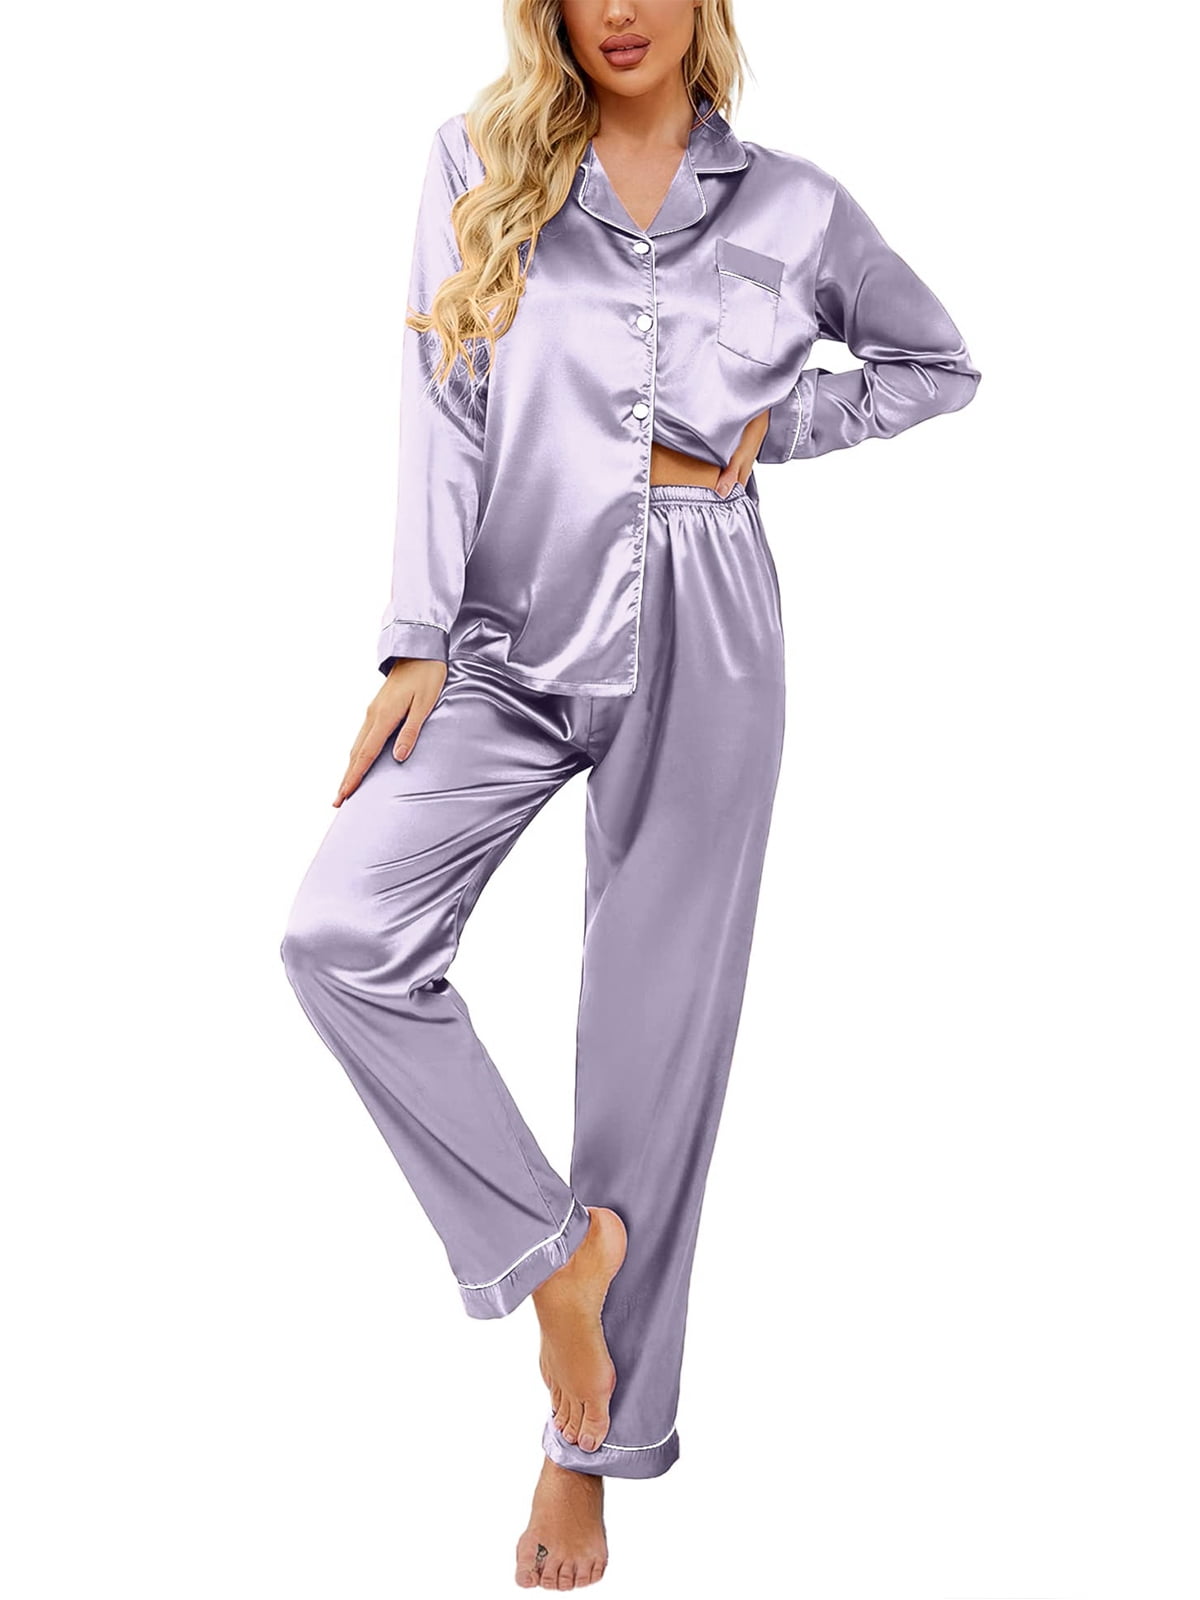 DAKIMOE Sleepwear Womens Silky Satin Pajamas Set Long Sleeve Nightwear  Loungewear, Light Purple, S 